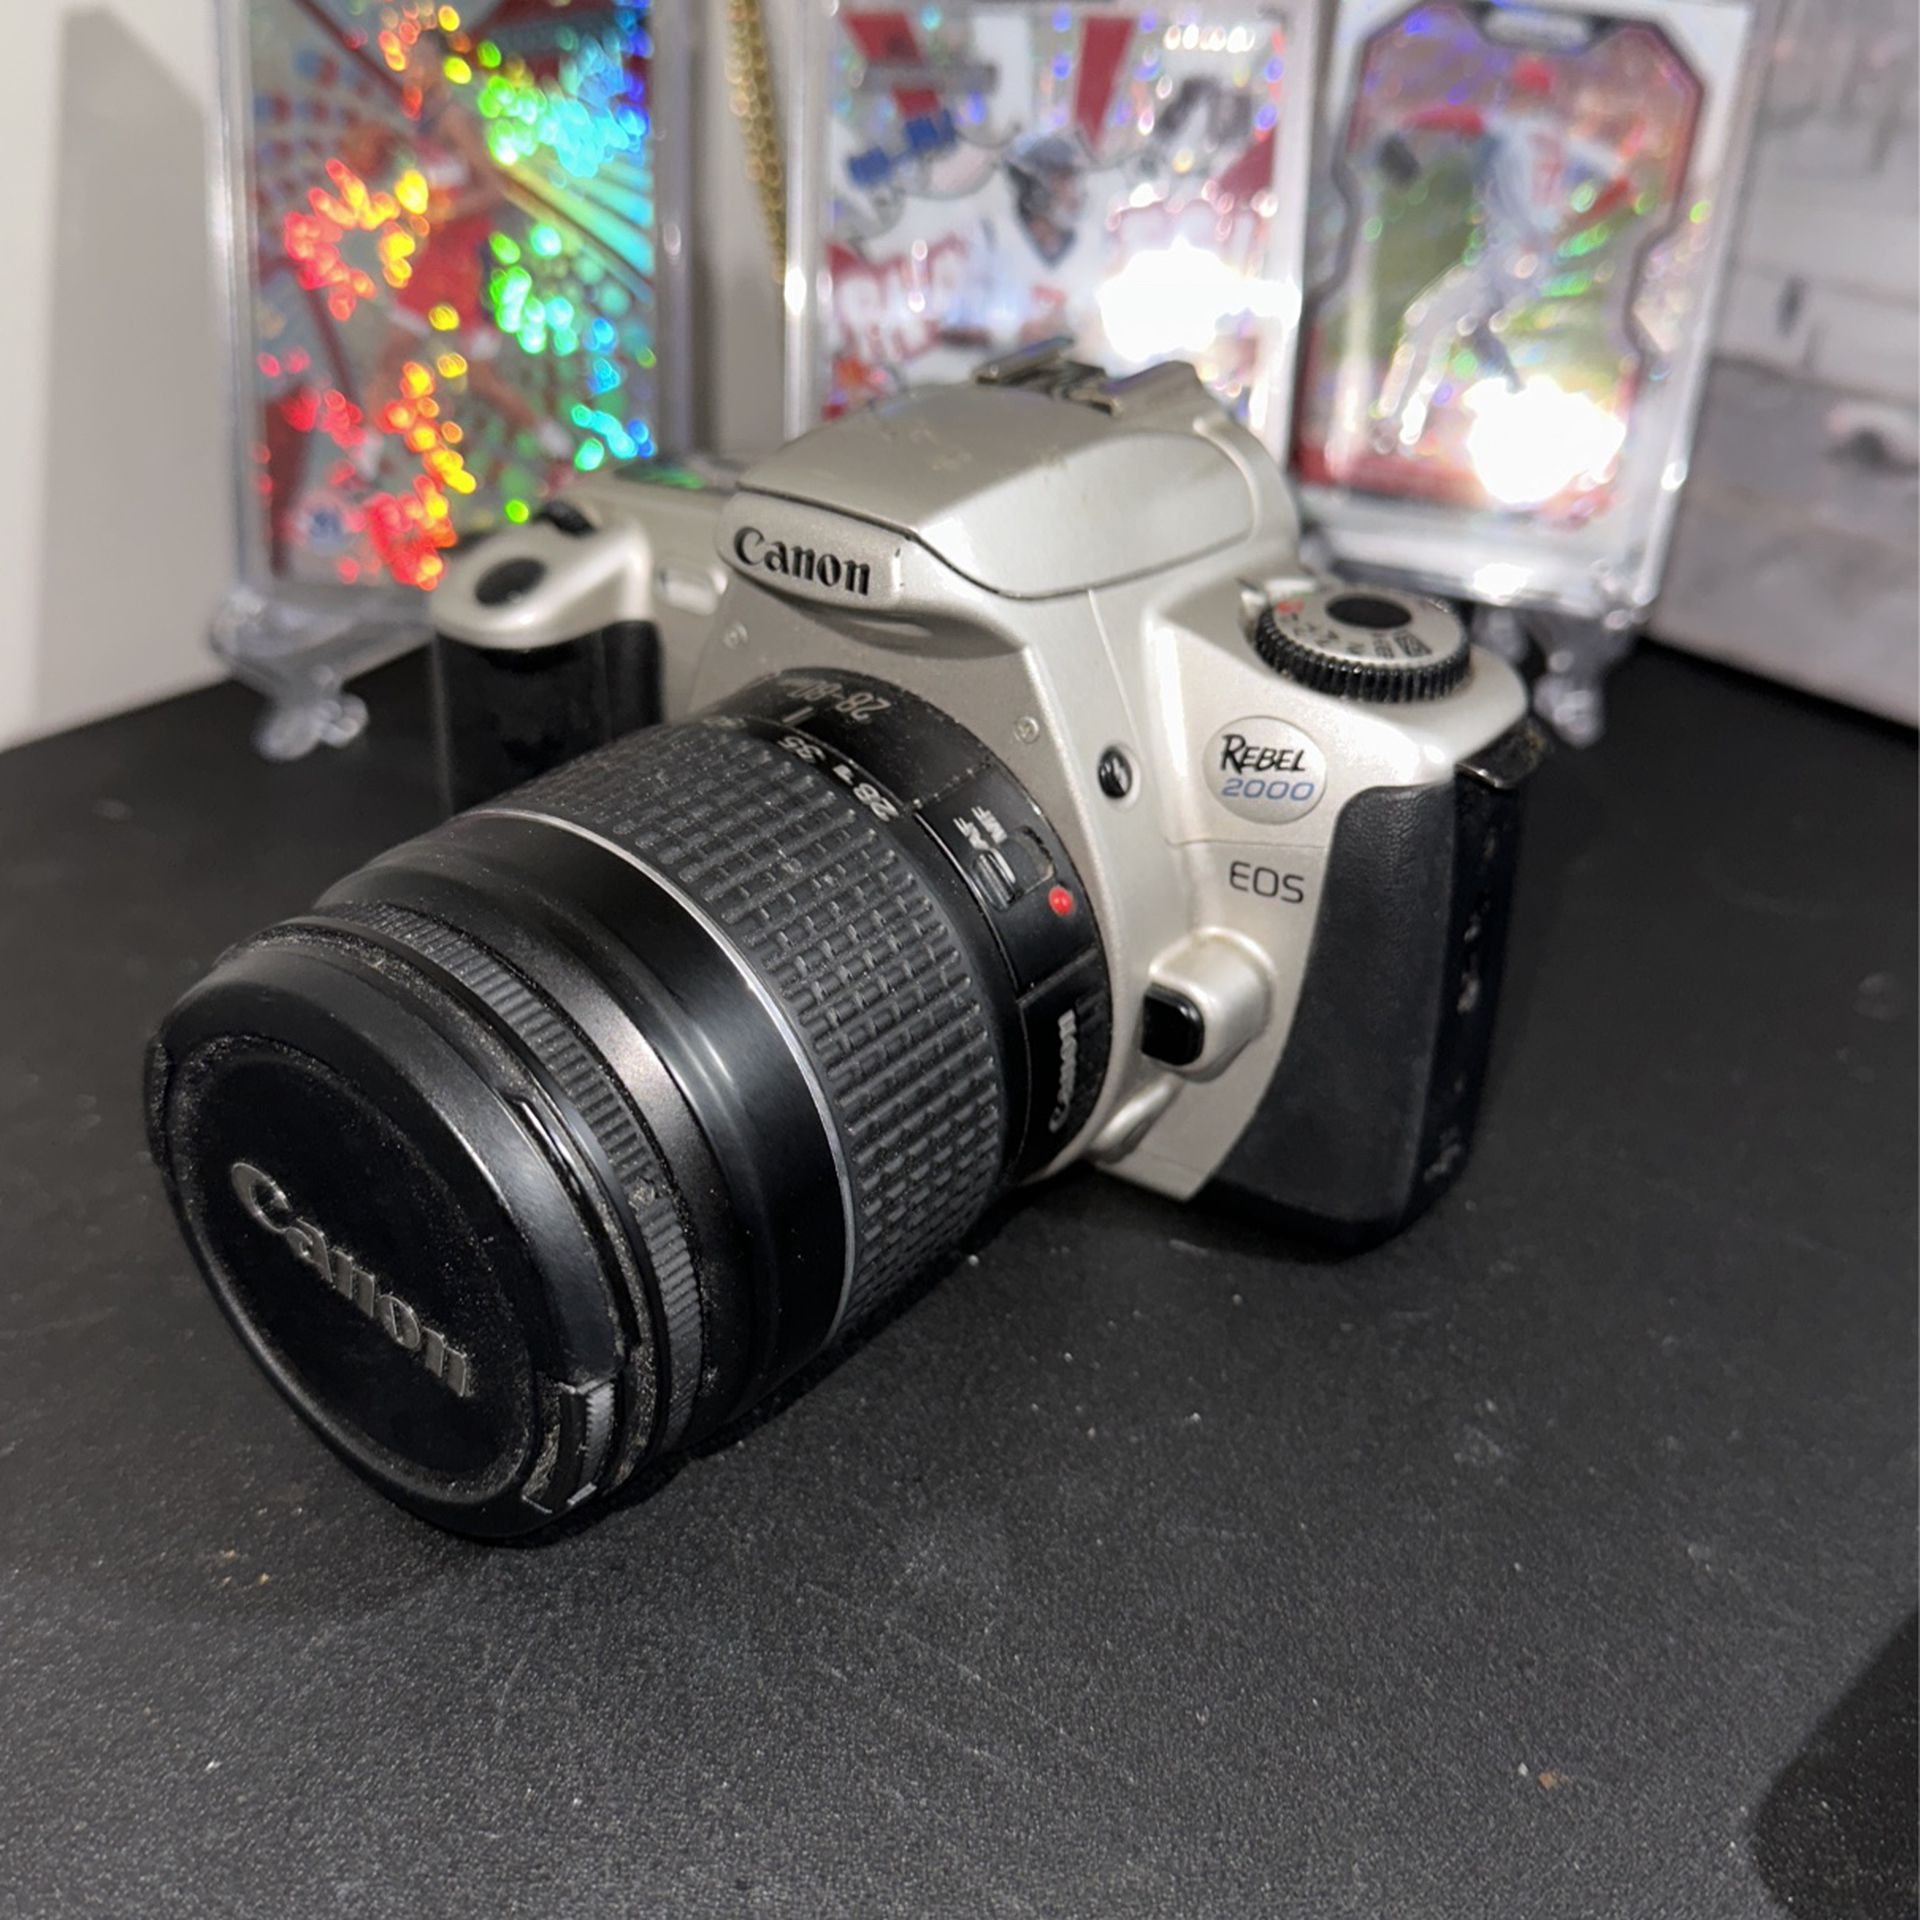 Canon EOS Rebel 2000 w/Canon 28-80mm zoom lens